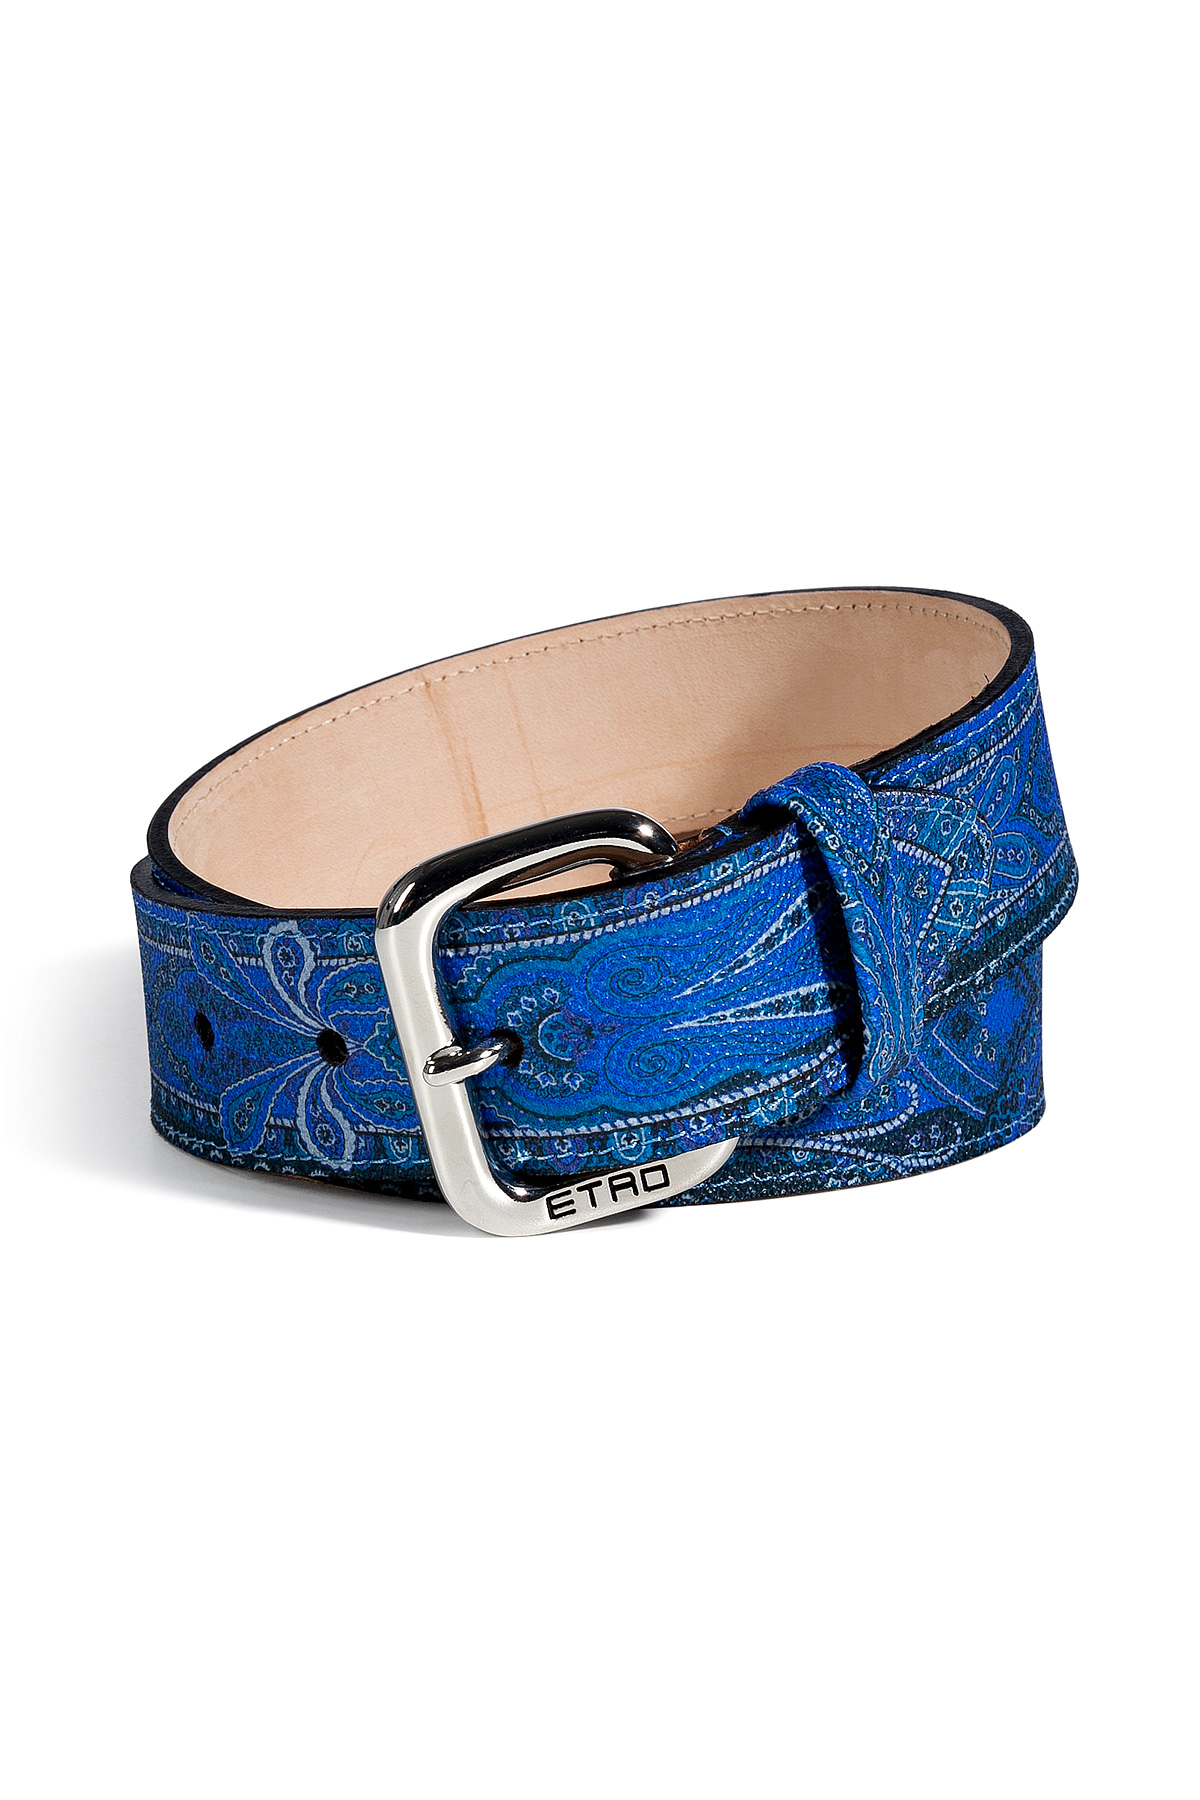 Etro Blue Patterned Belt in Blue for Men | Lyst